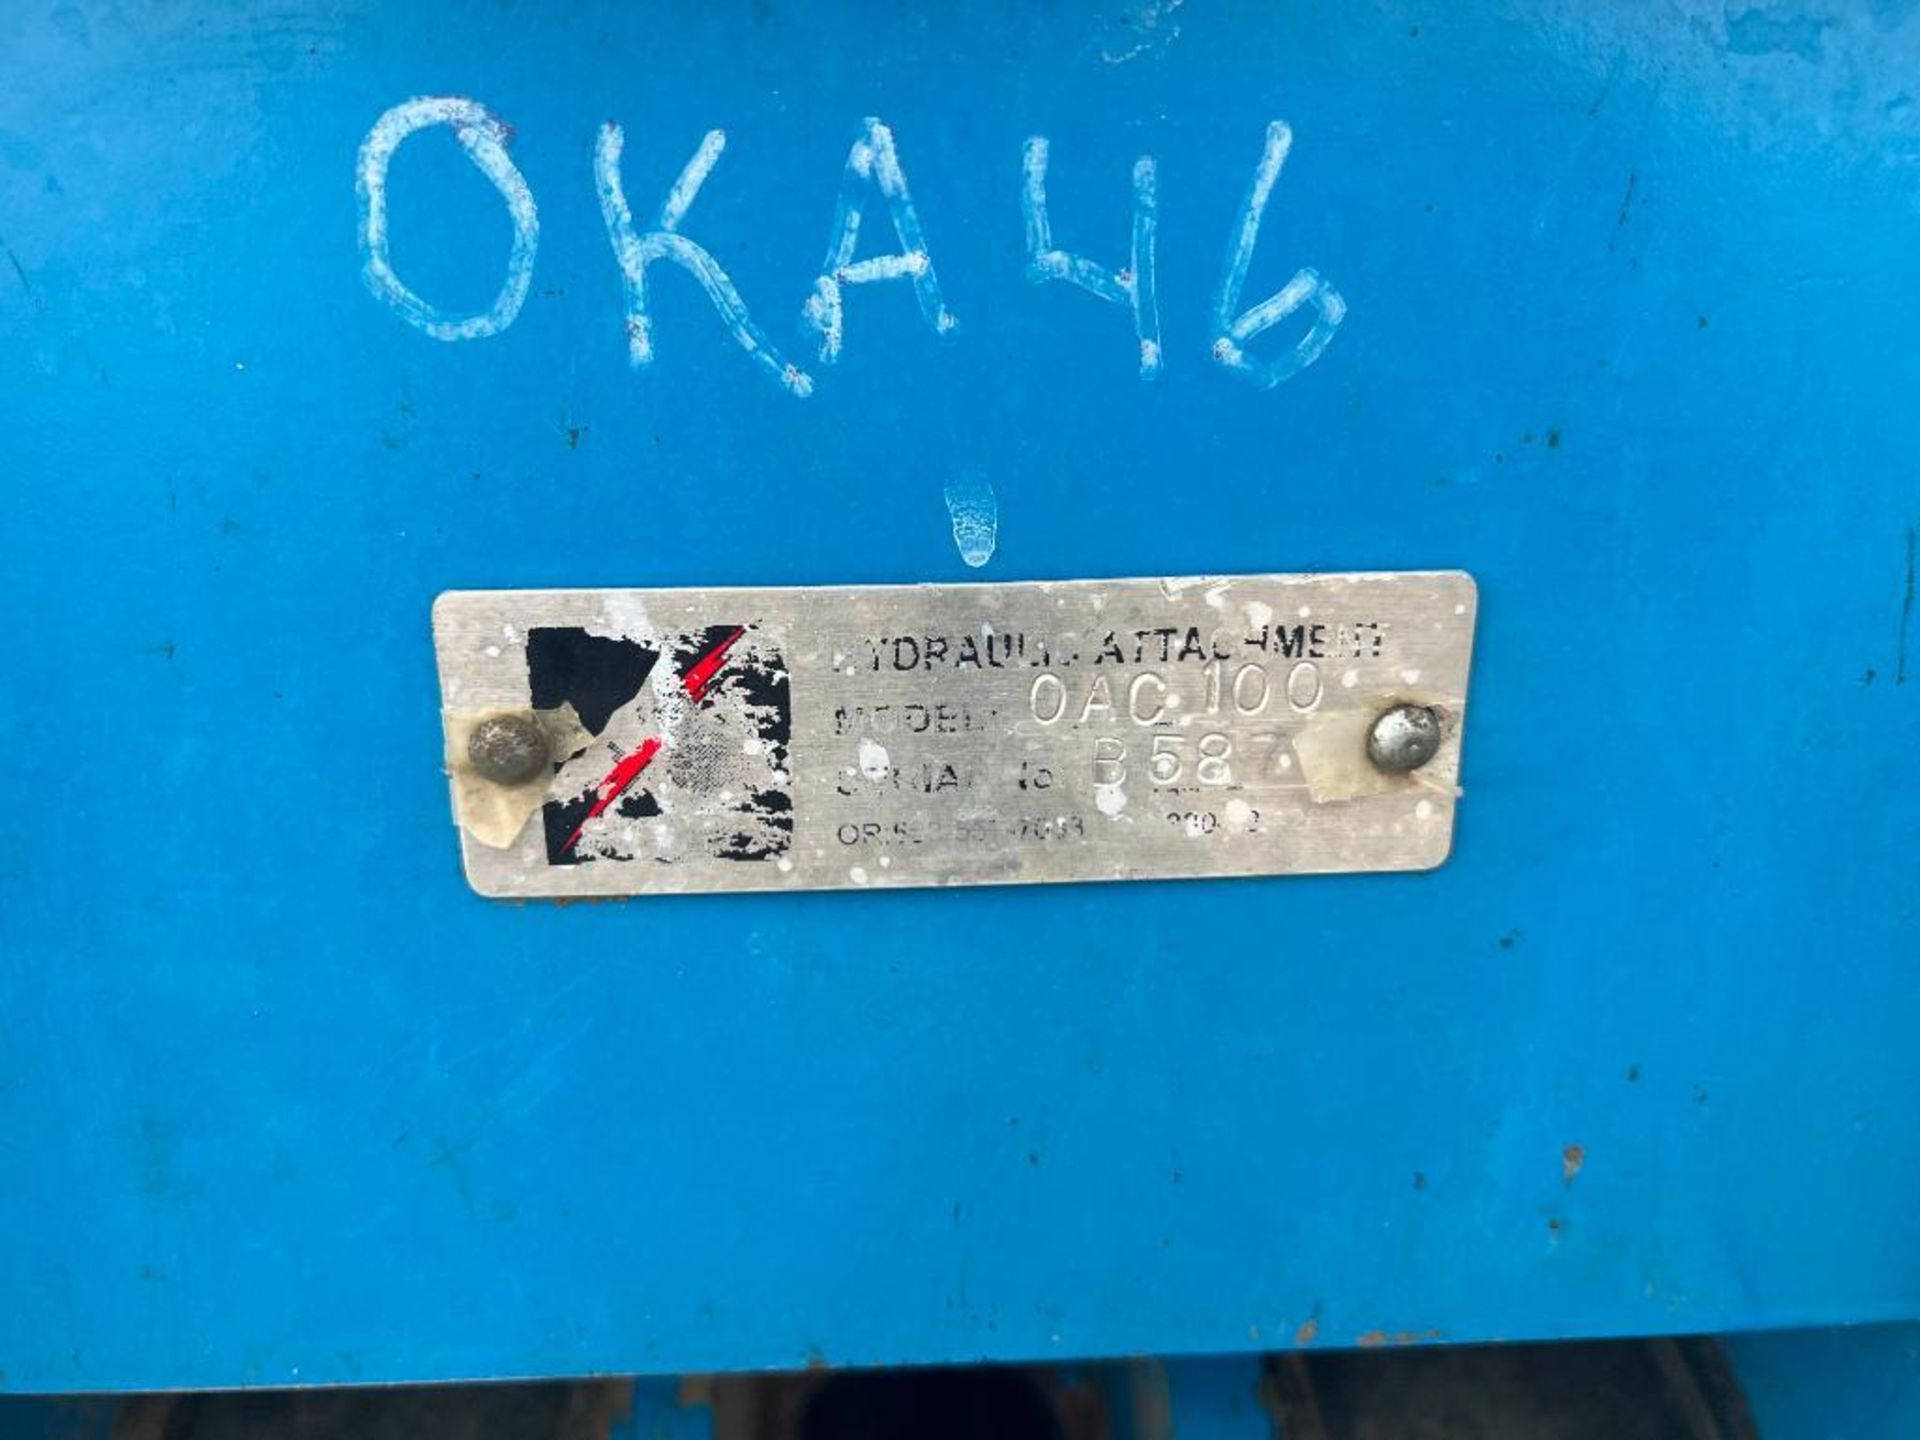 Okada America OAC100 Boom Mounted Hydraulic Plate Compactor for mini-excavator applications, 300# Wo - Image 5 of 7